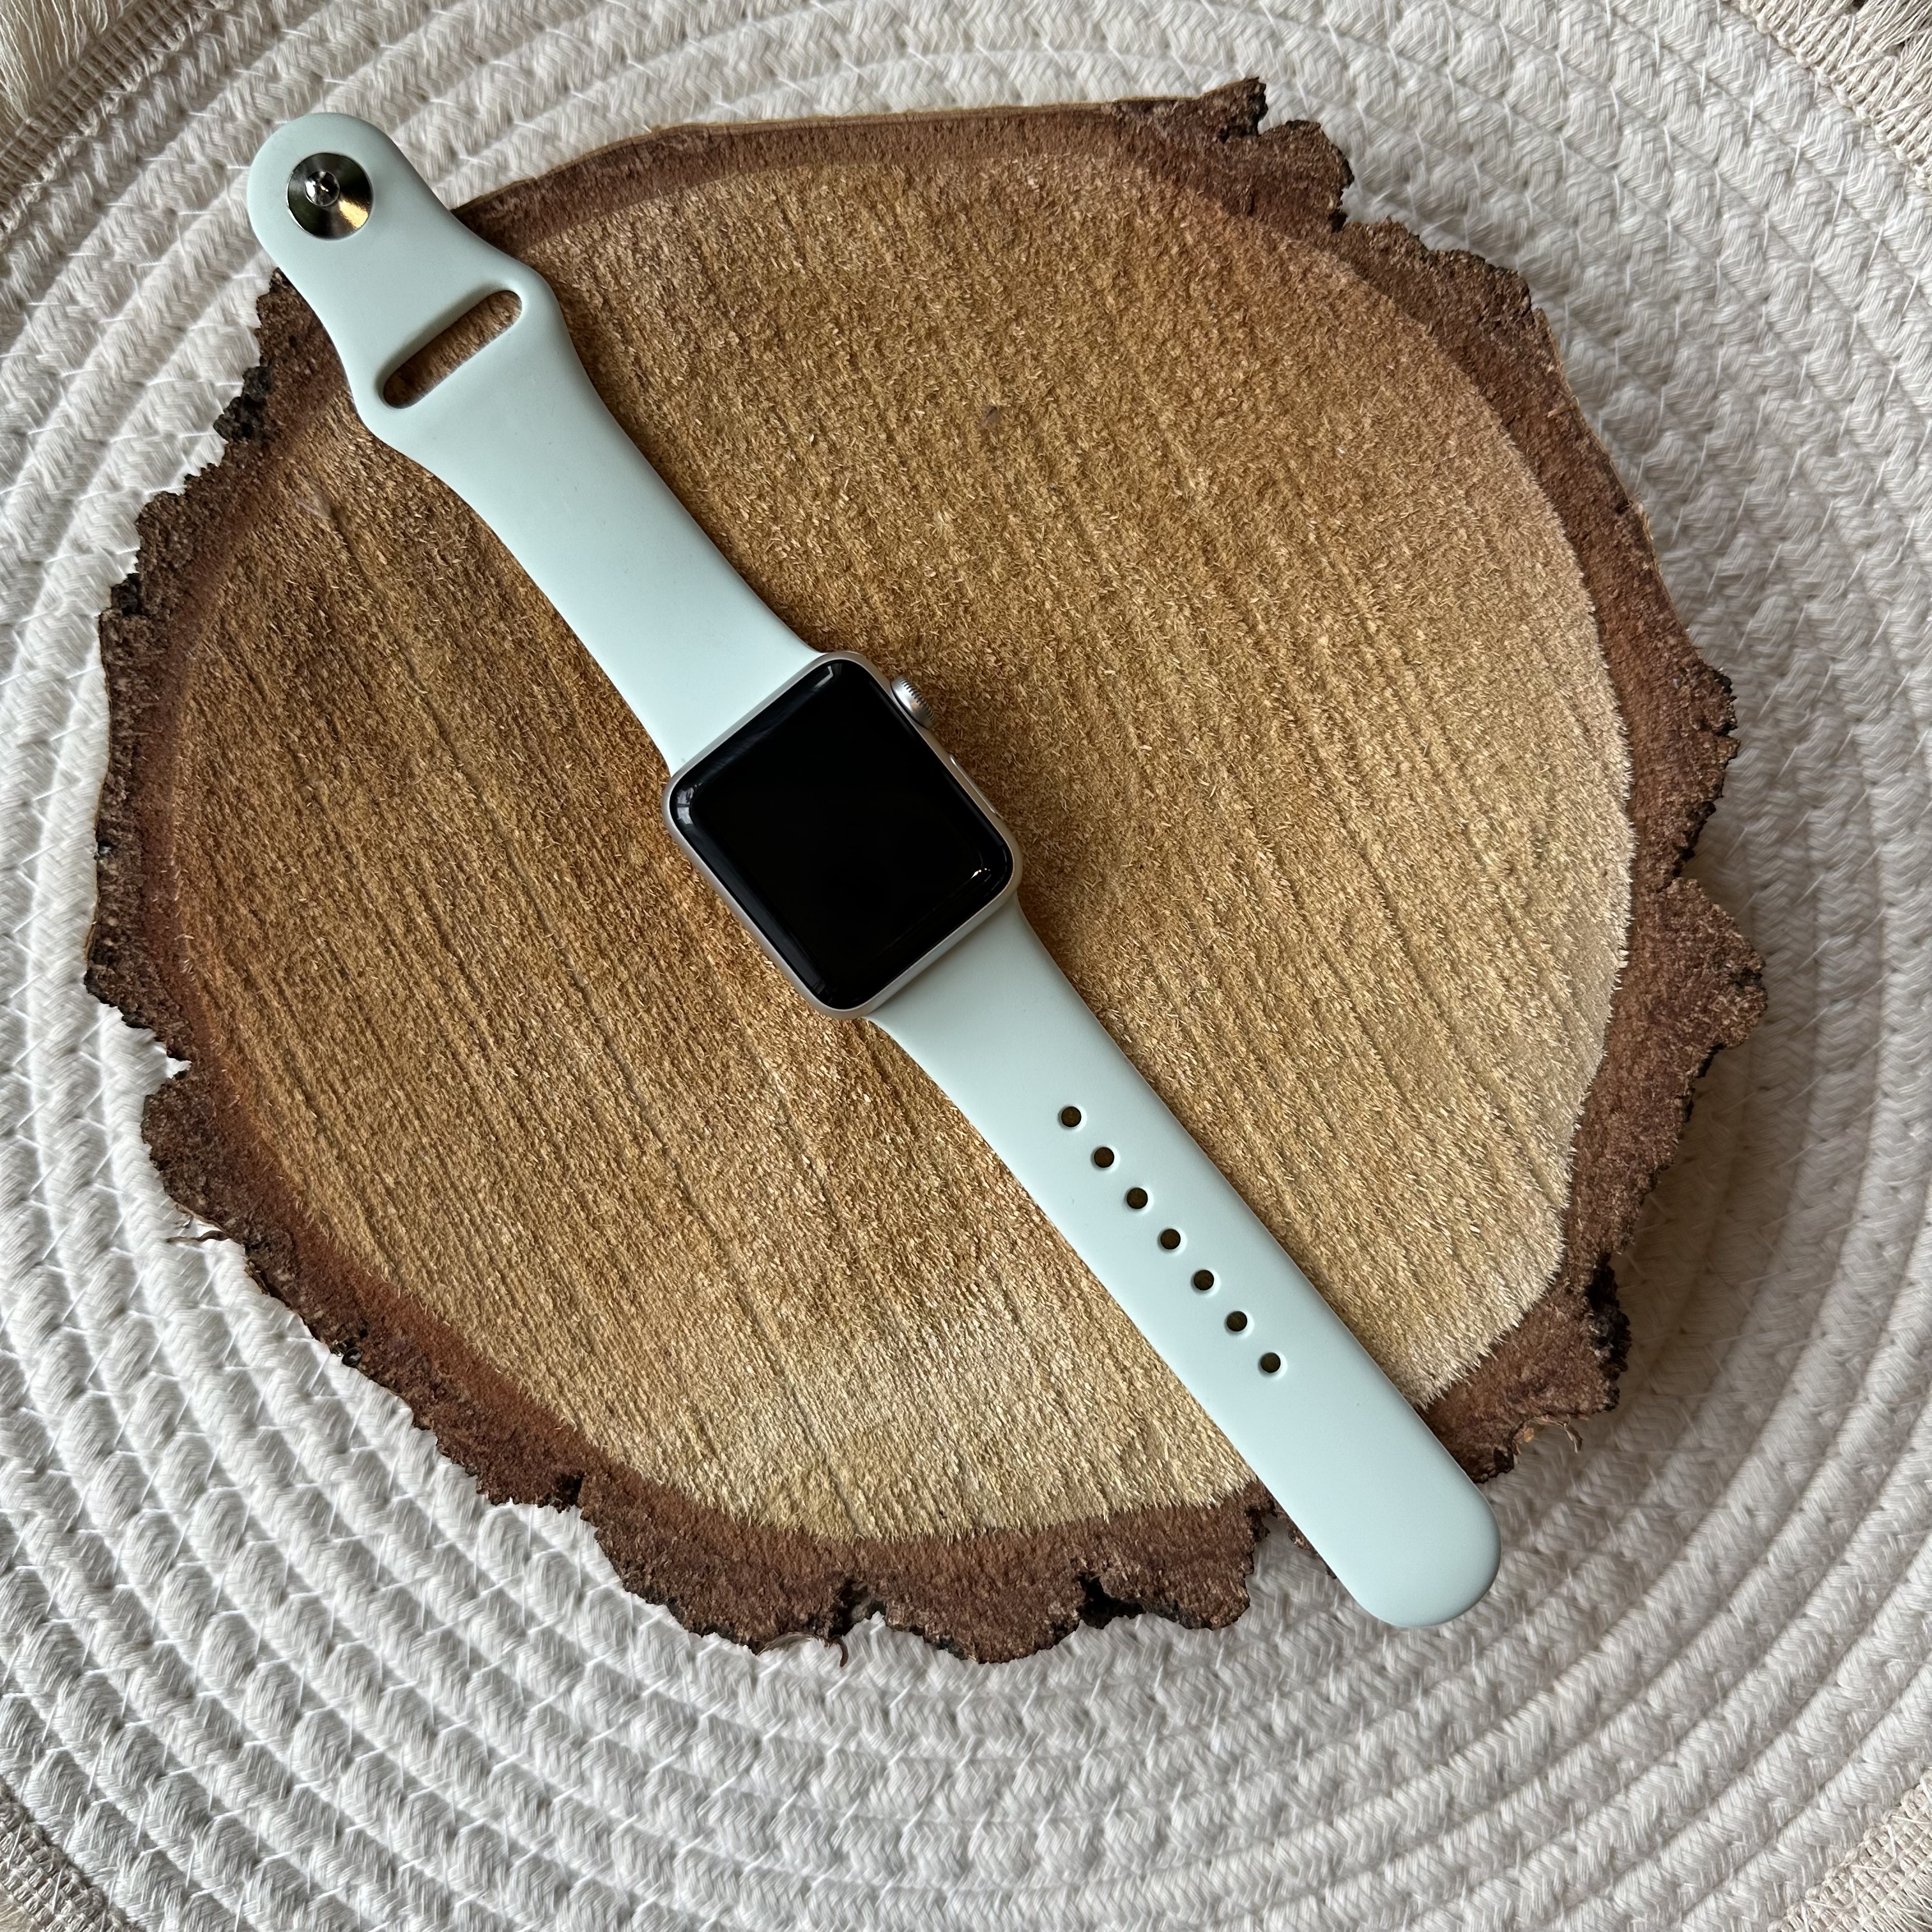 Apple Watch Sport Strap - Soft Mint